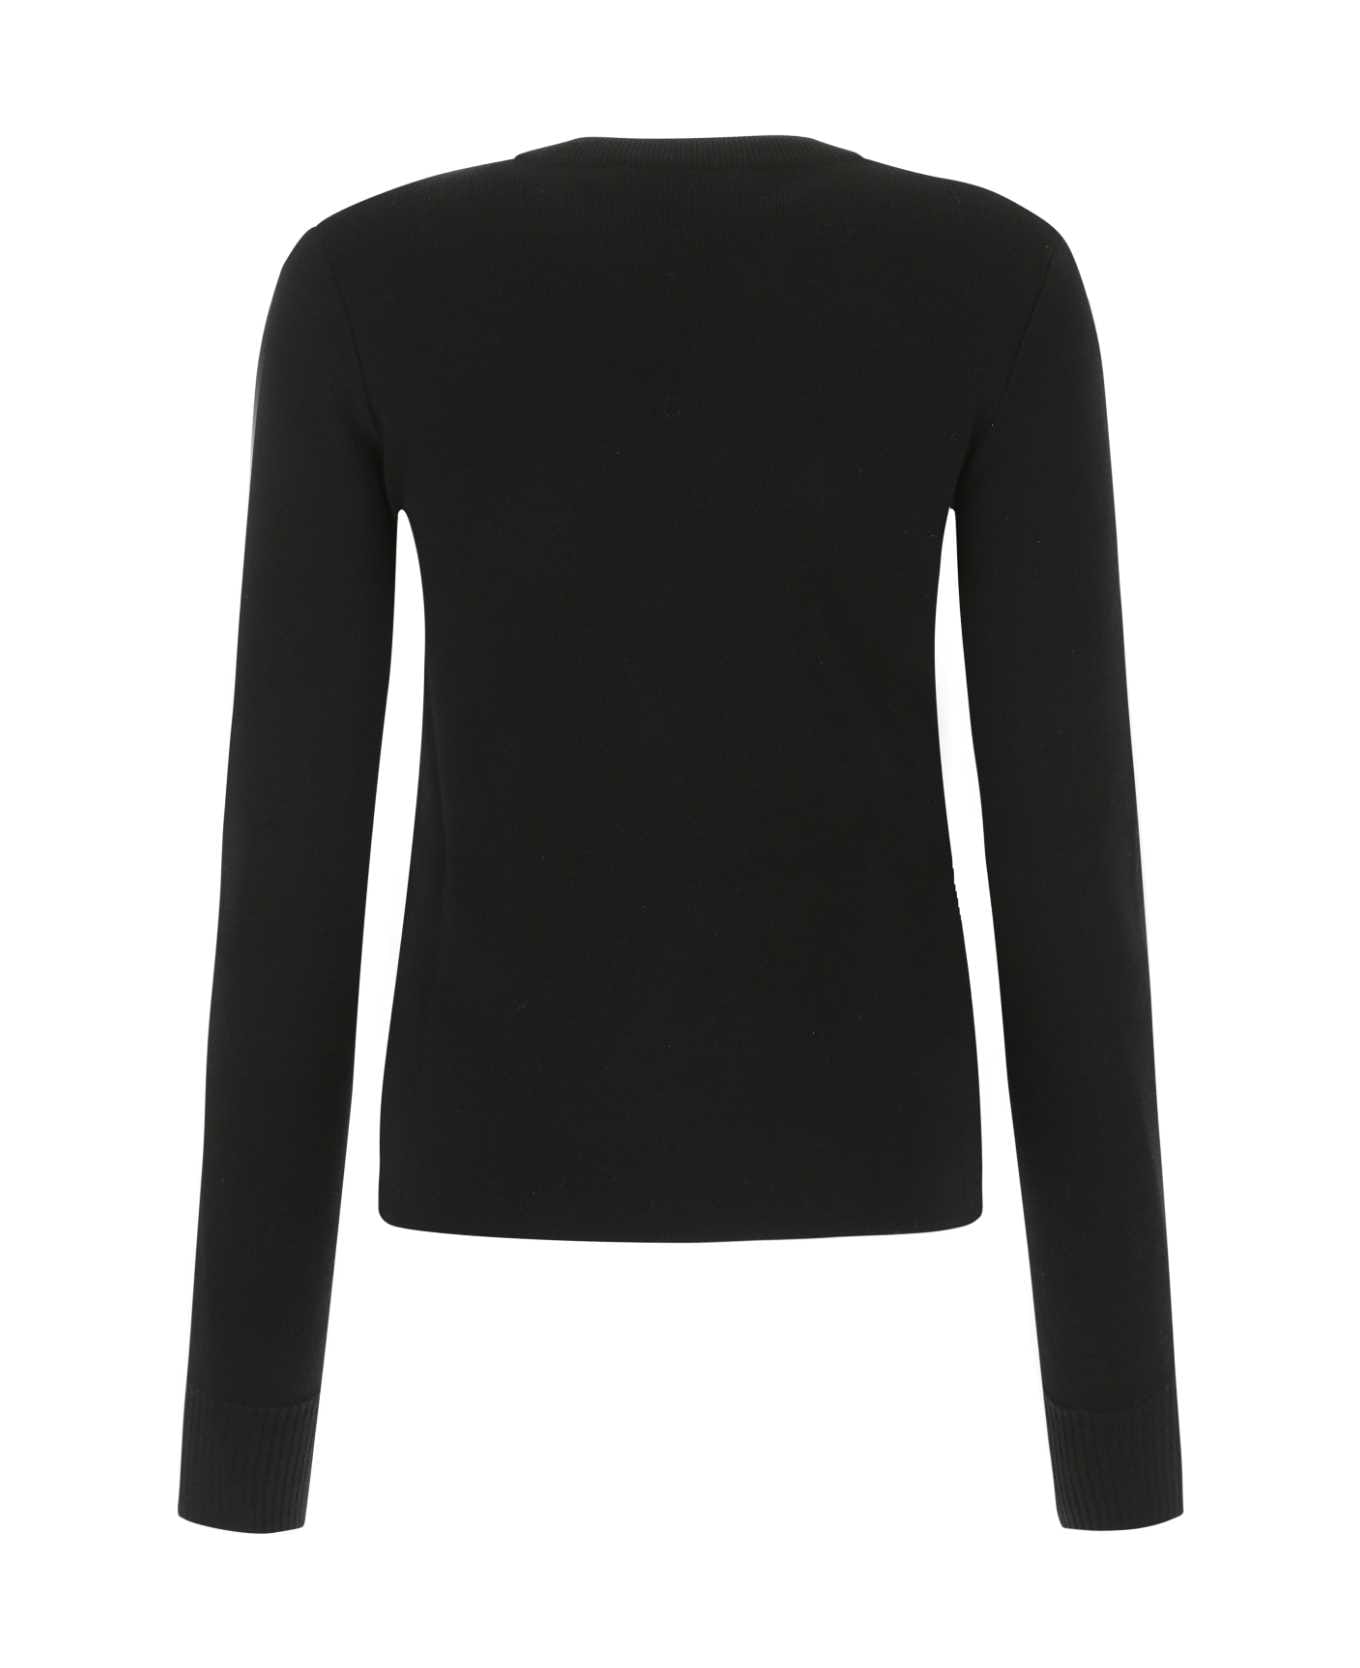 Alexander McQueen Black Stretch Wool Blend Sweater - 1000 ニットウェア